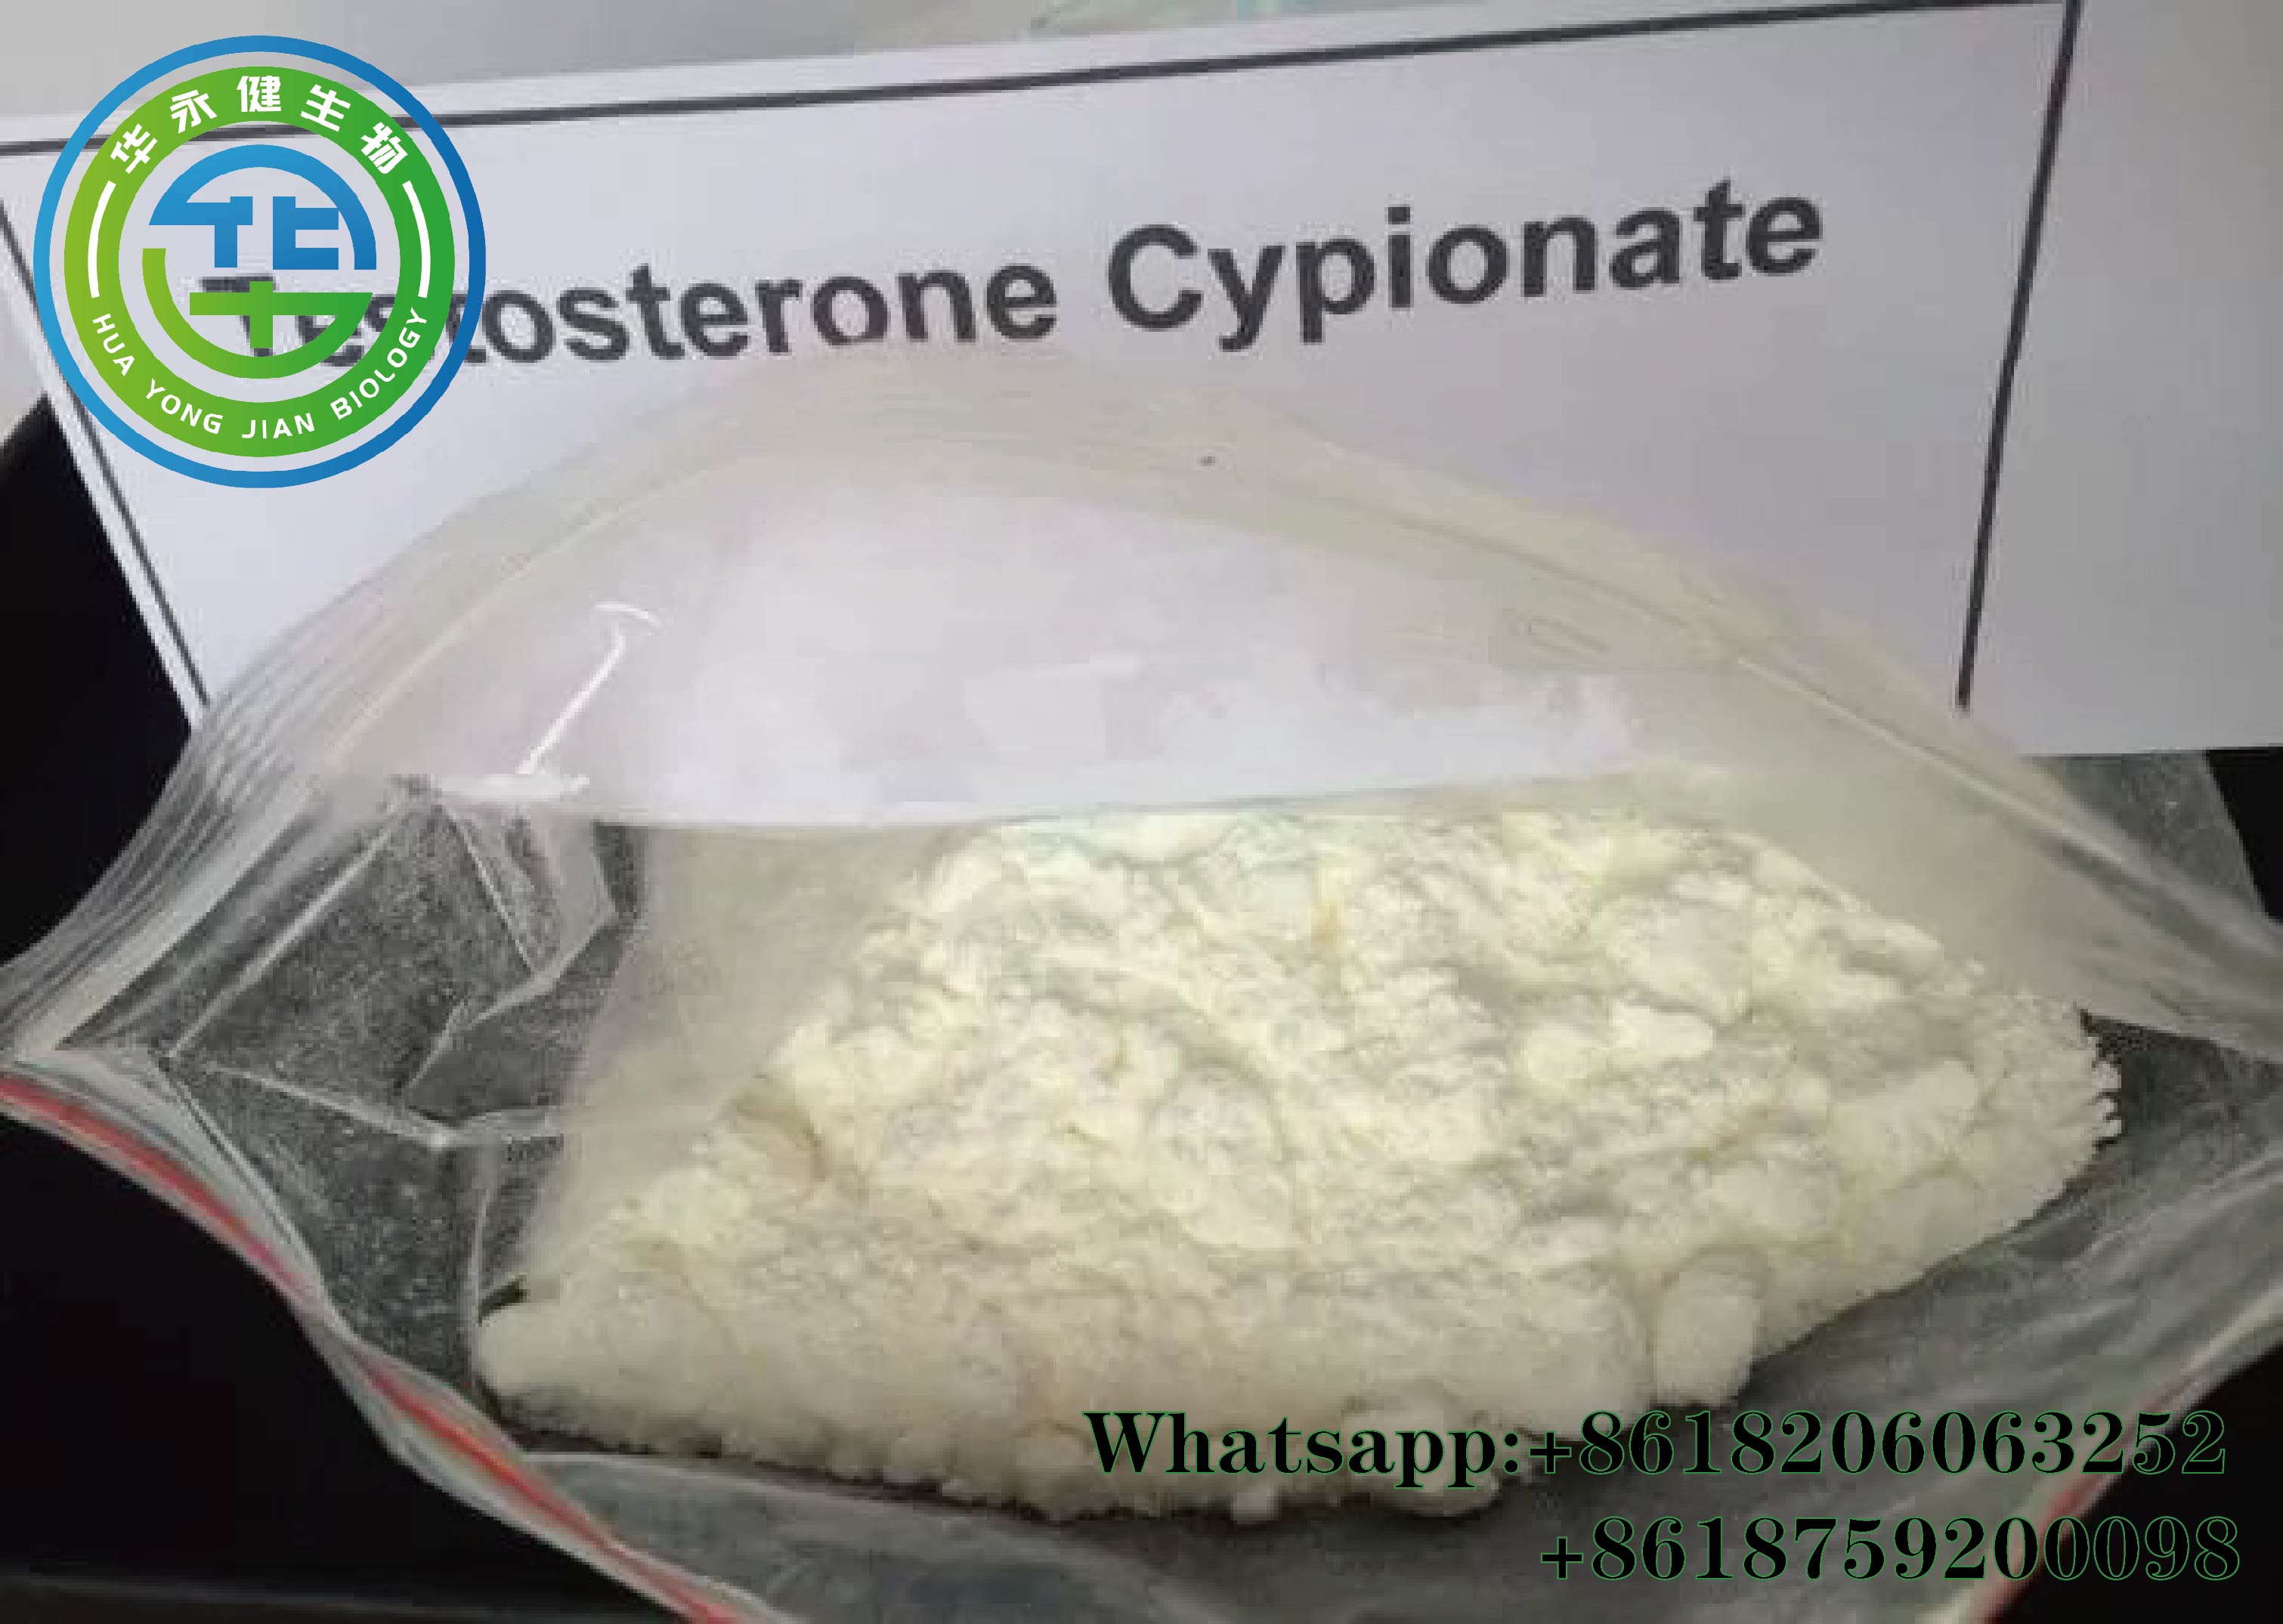 Testosterone Cypionate19